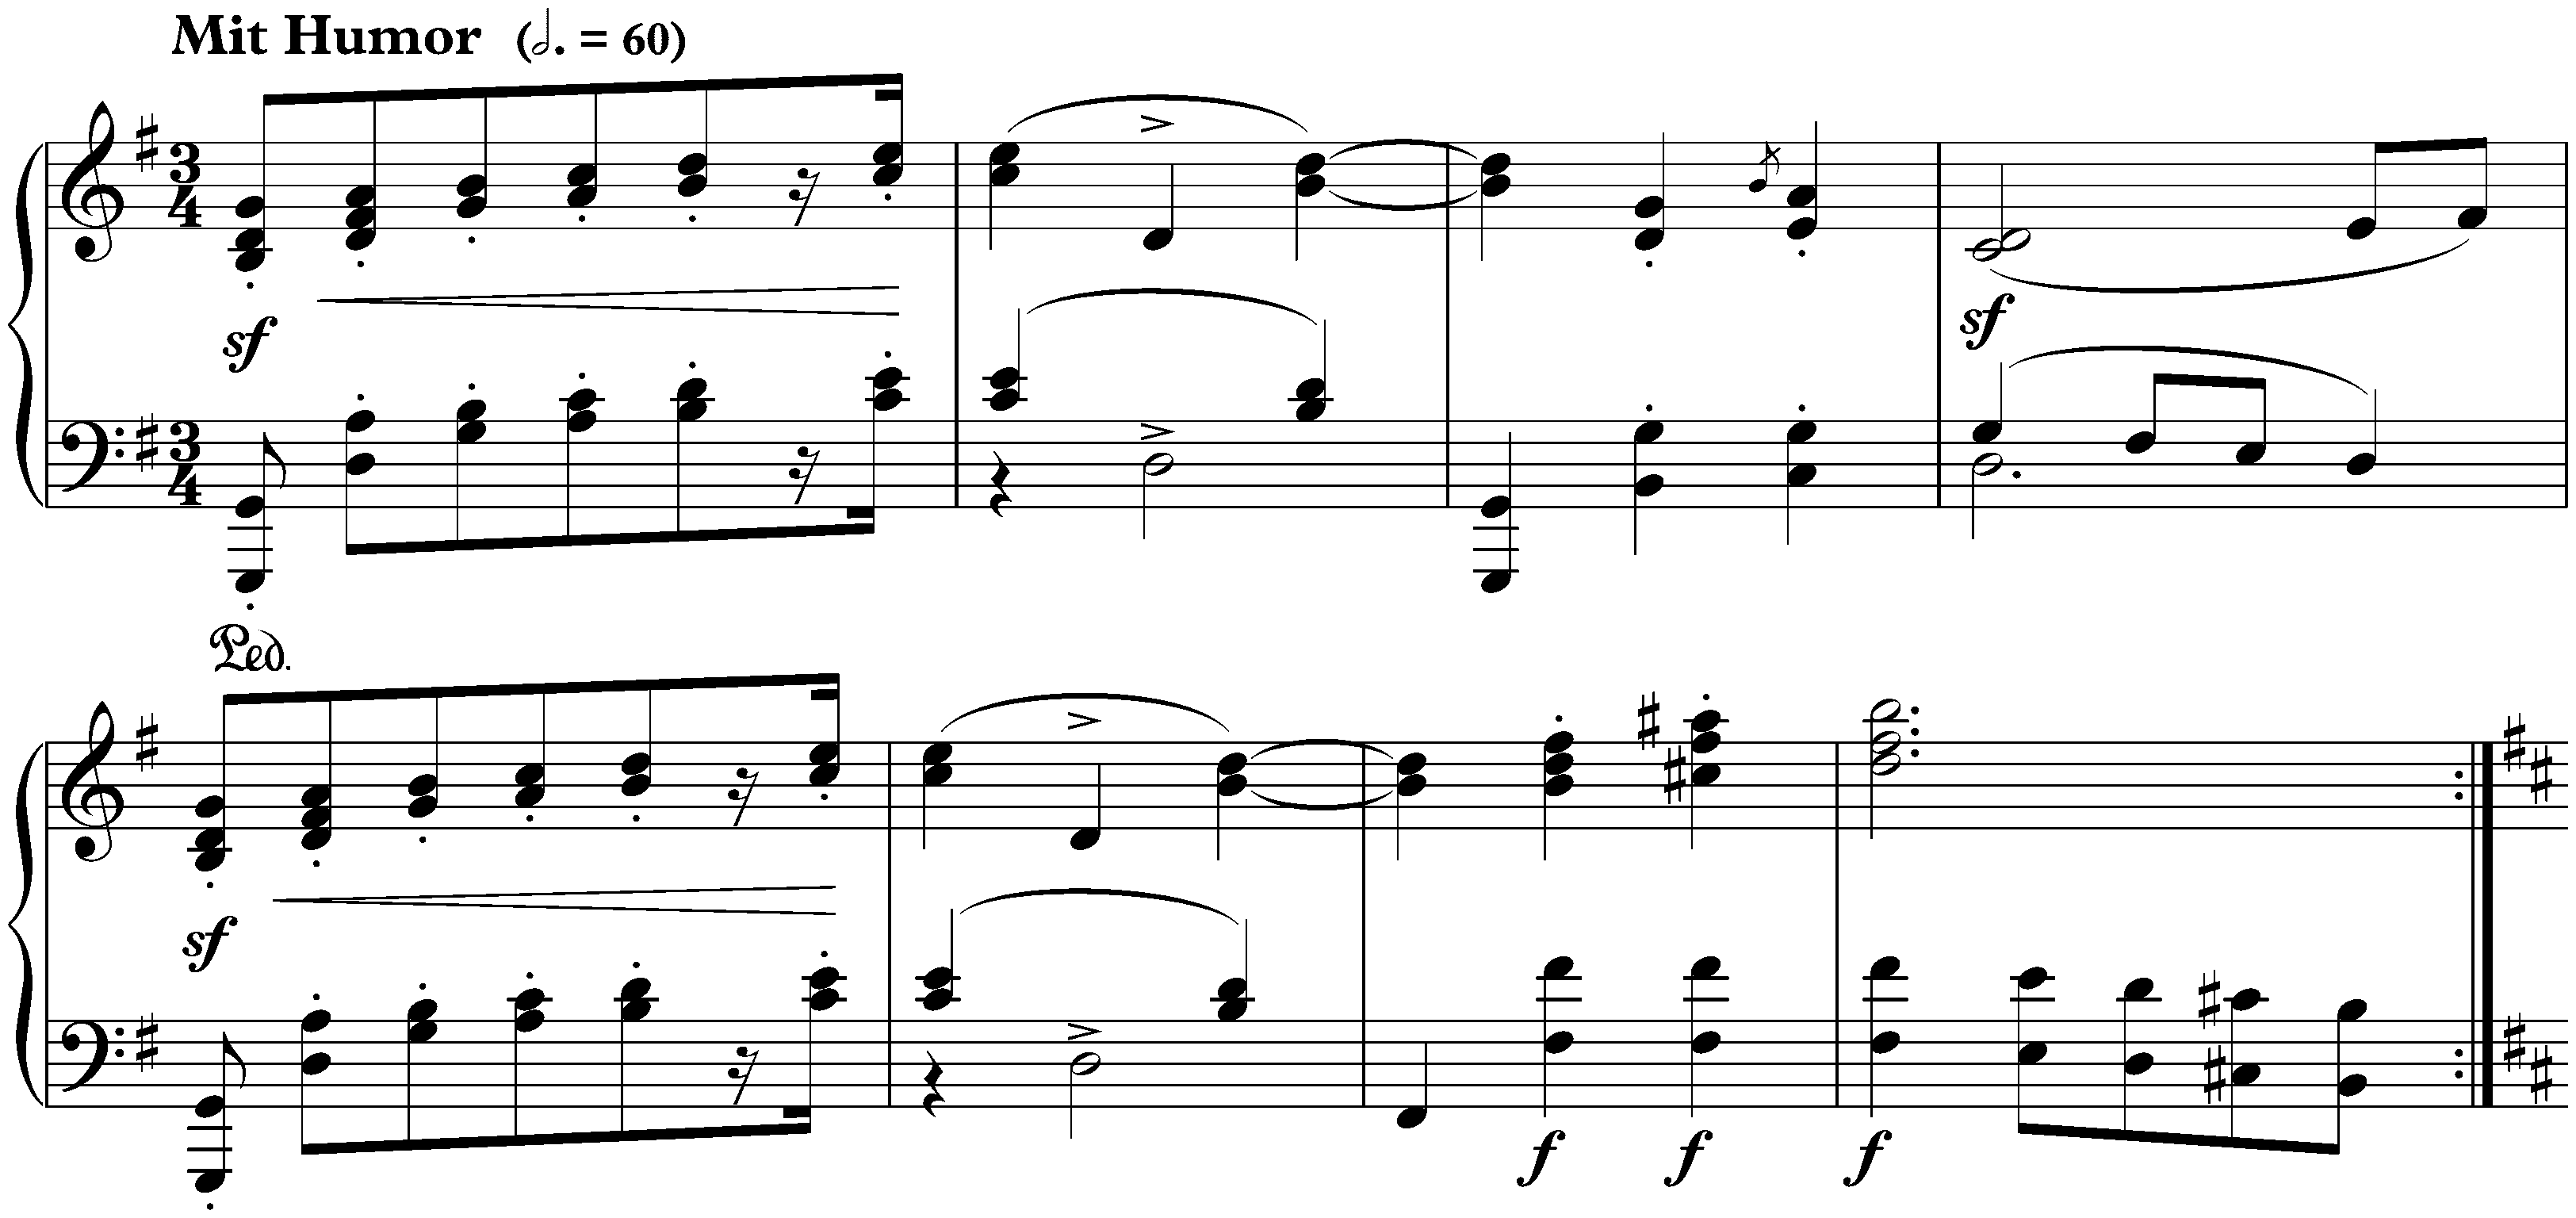 Davidsbündlertänze, op. 6; 3. Mit Humor